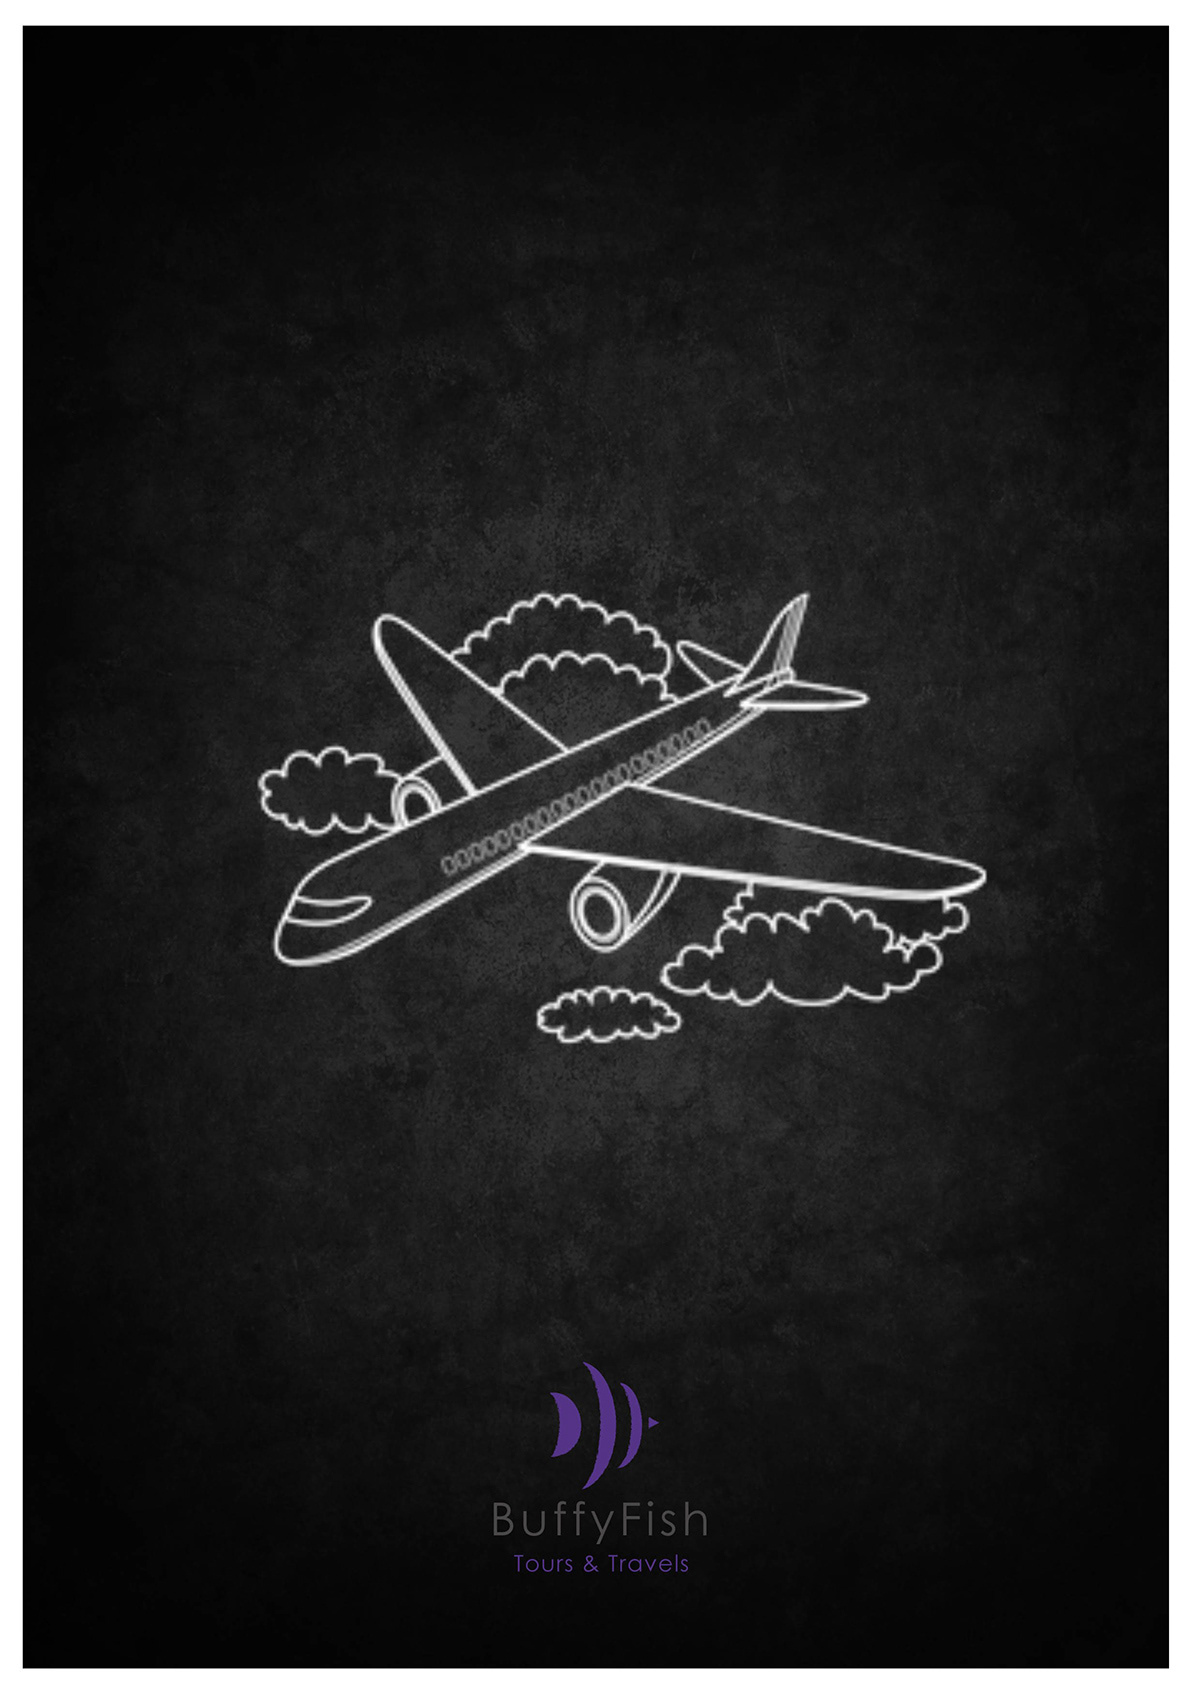 Travel Aeroplane france world londonbridge tourism eiffil tower clouds journey campaign poster flyer